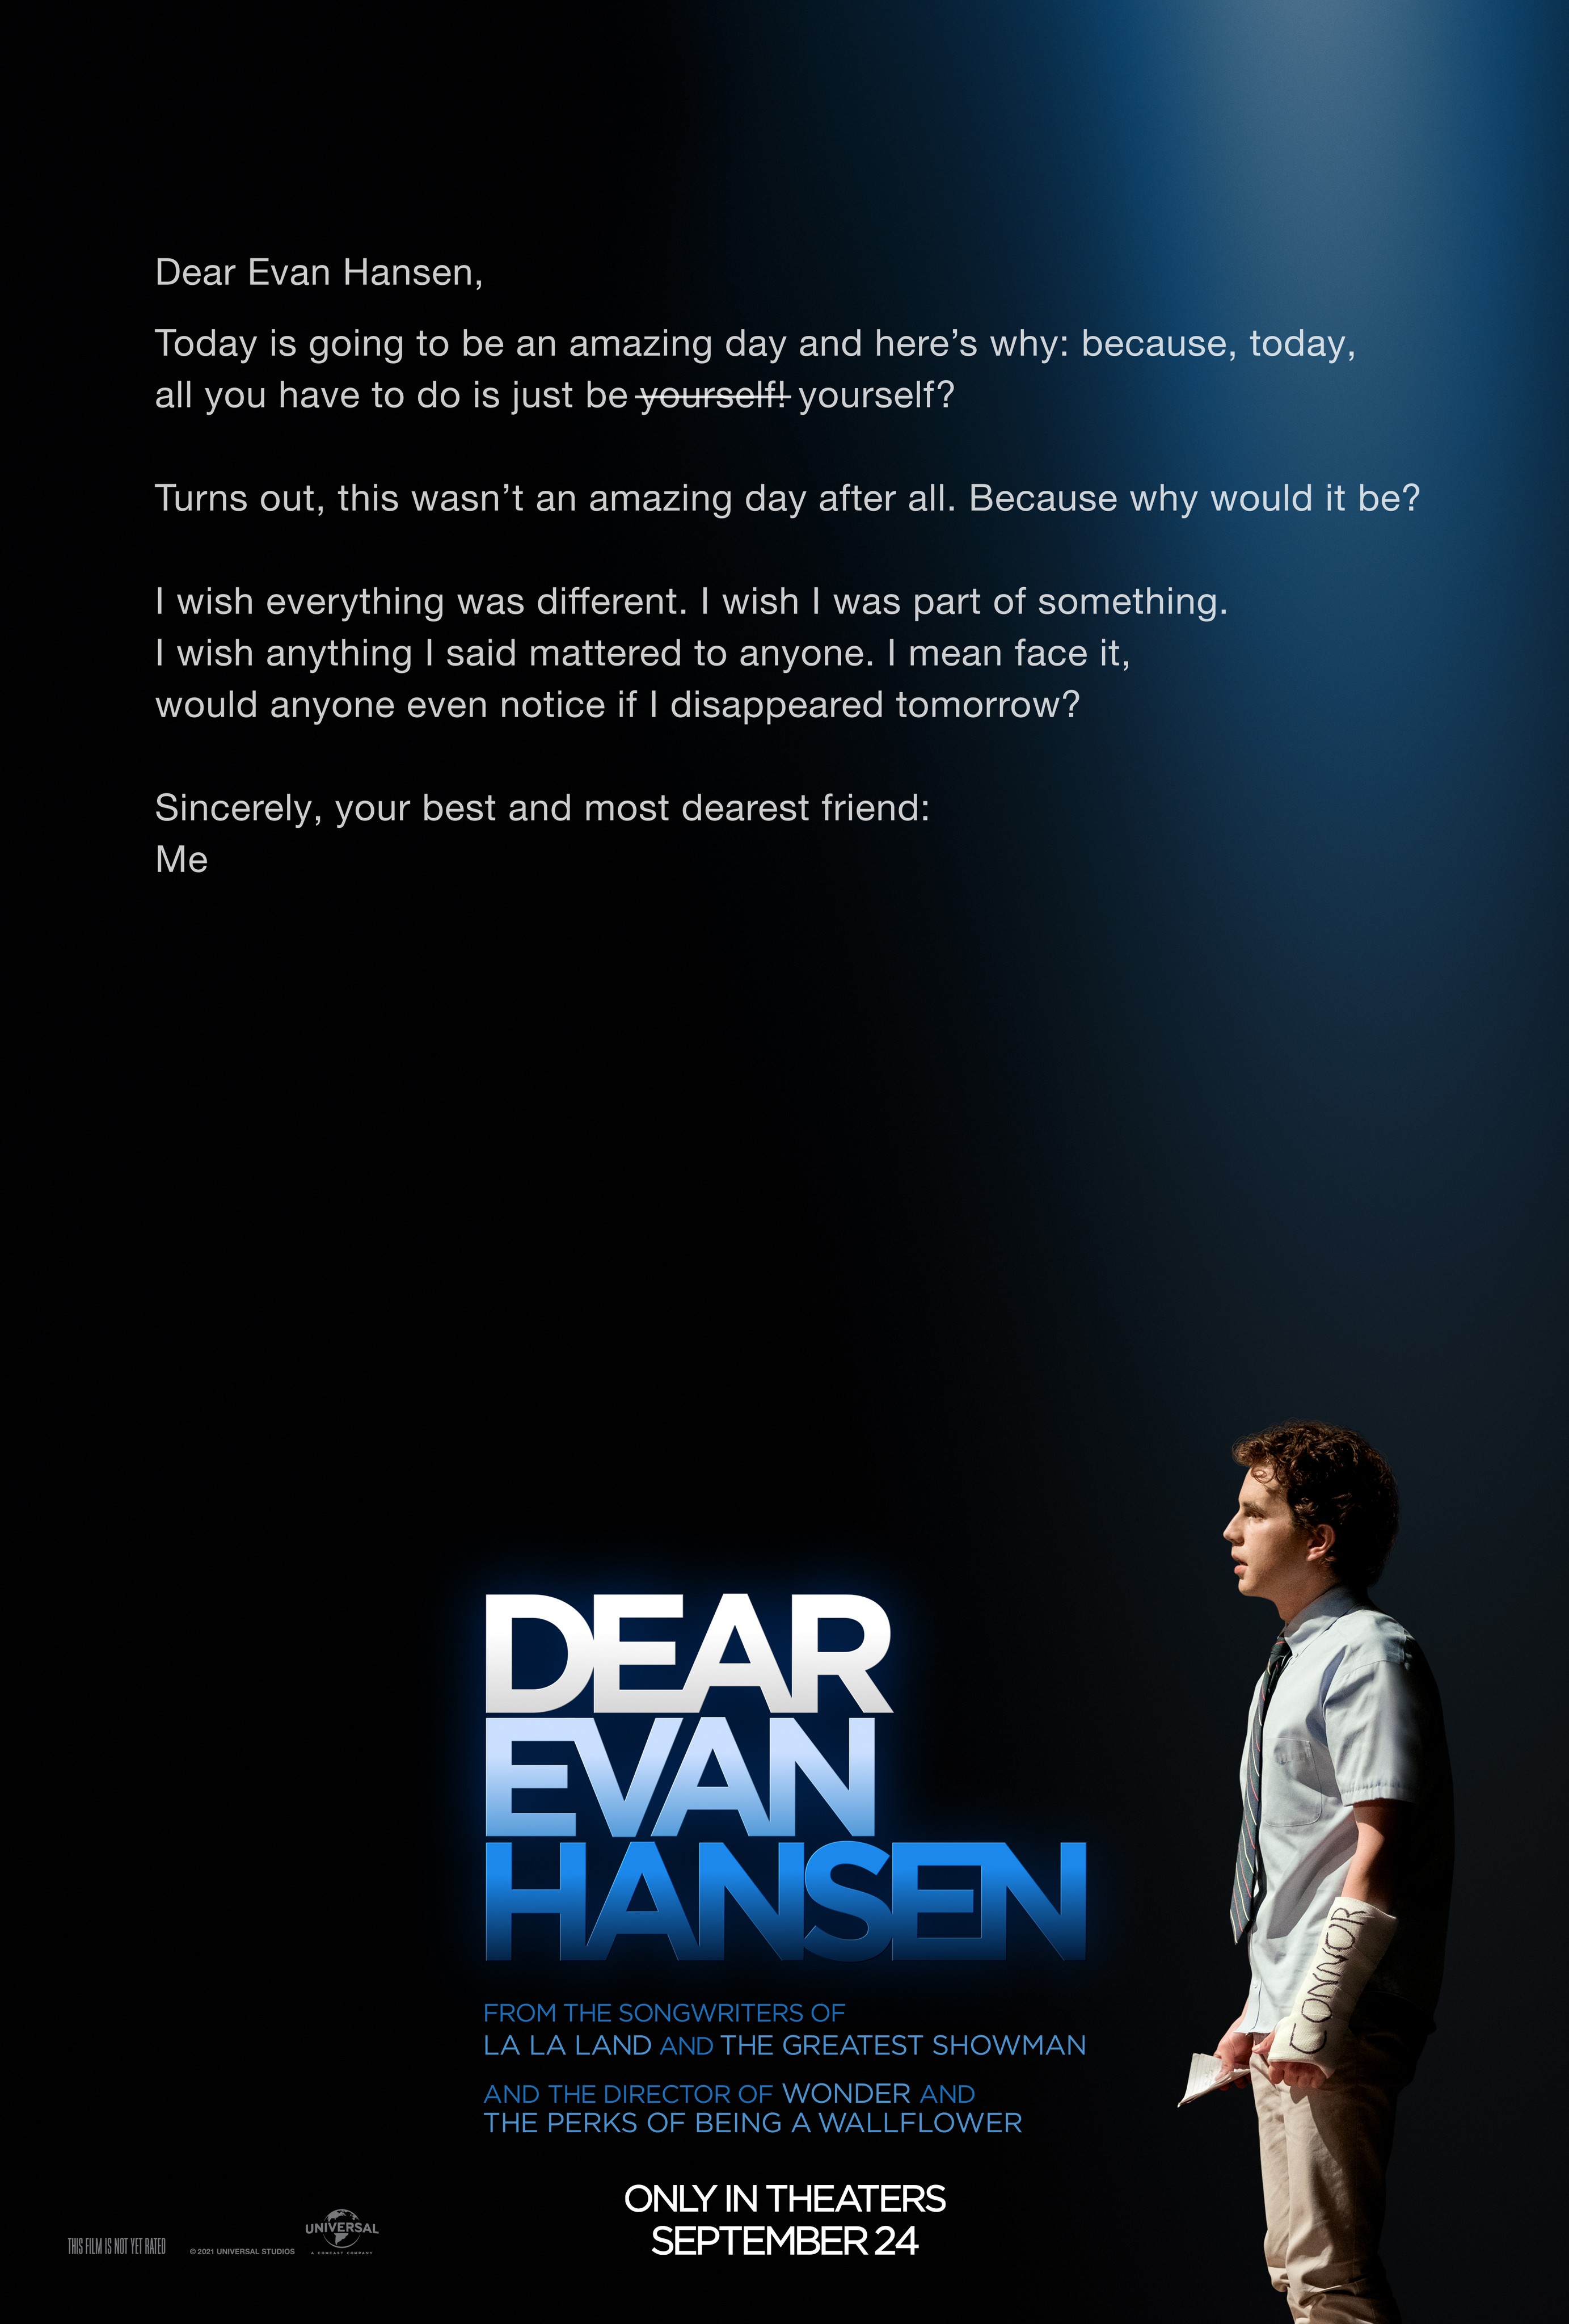 Dear Evan Hansen - Movie Reviews